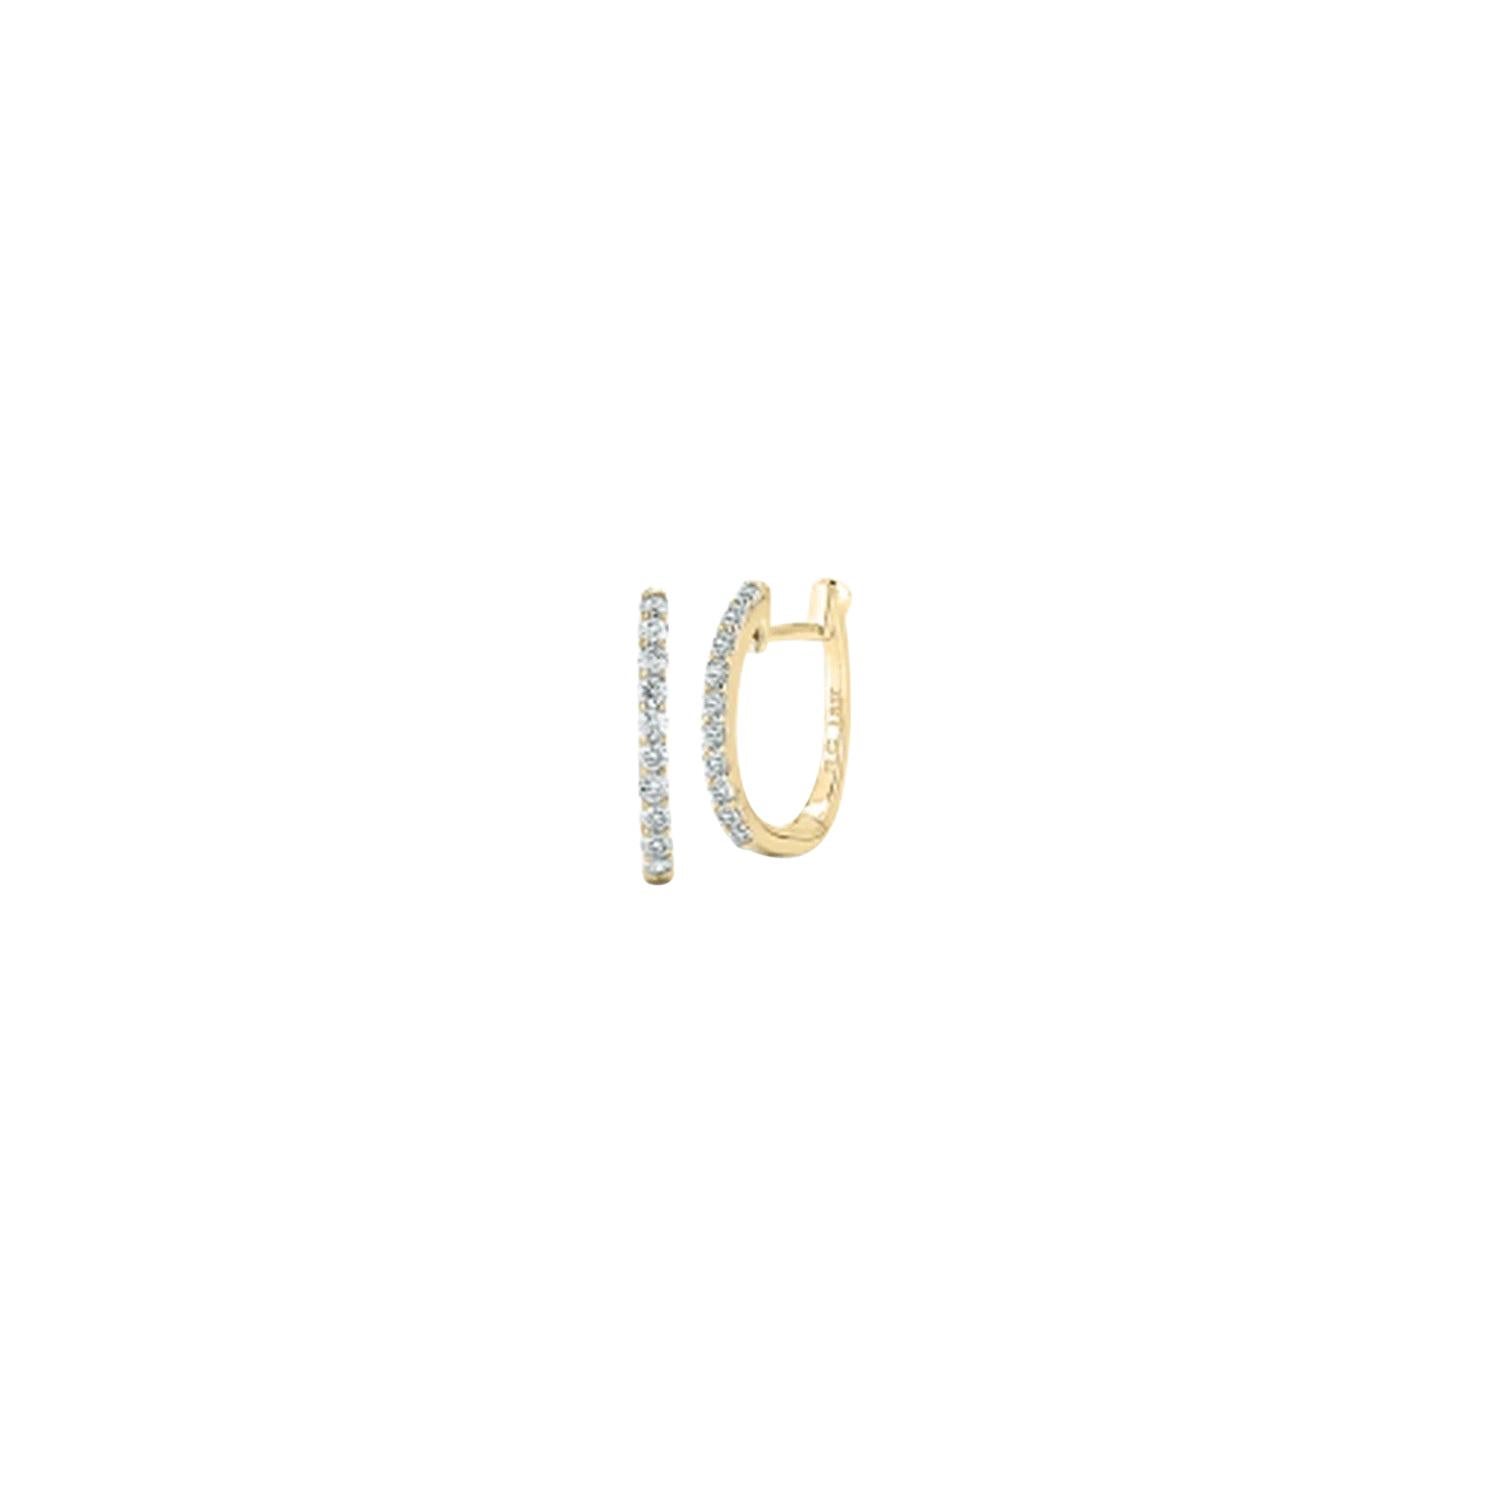 Roberto Coin Huggy Earrings with Micro-pave diamonds.
18k Yellow Gold
Diamonds 0.20 total carat weight
Length 12mm 
000466AYERX0
